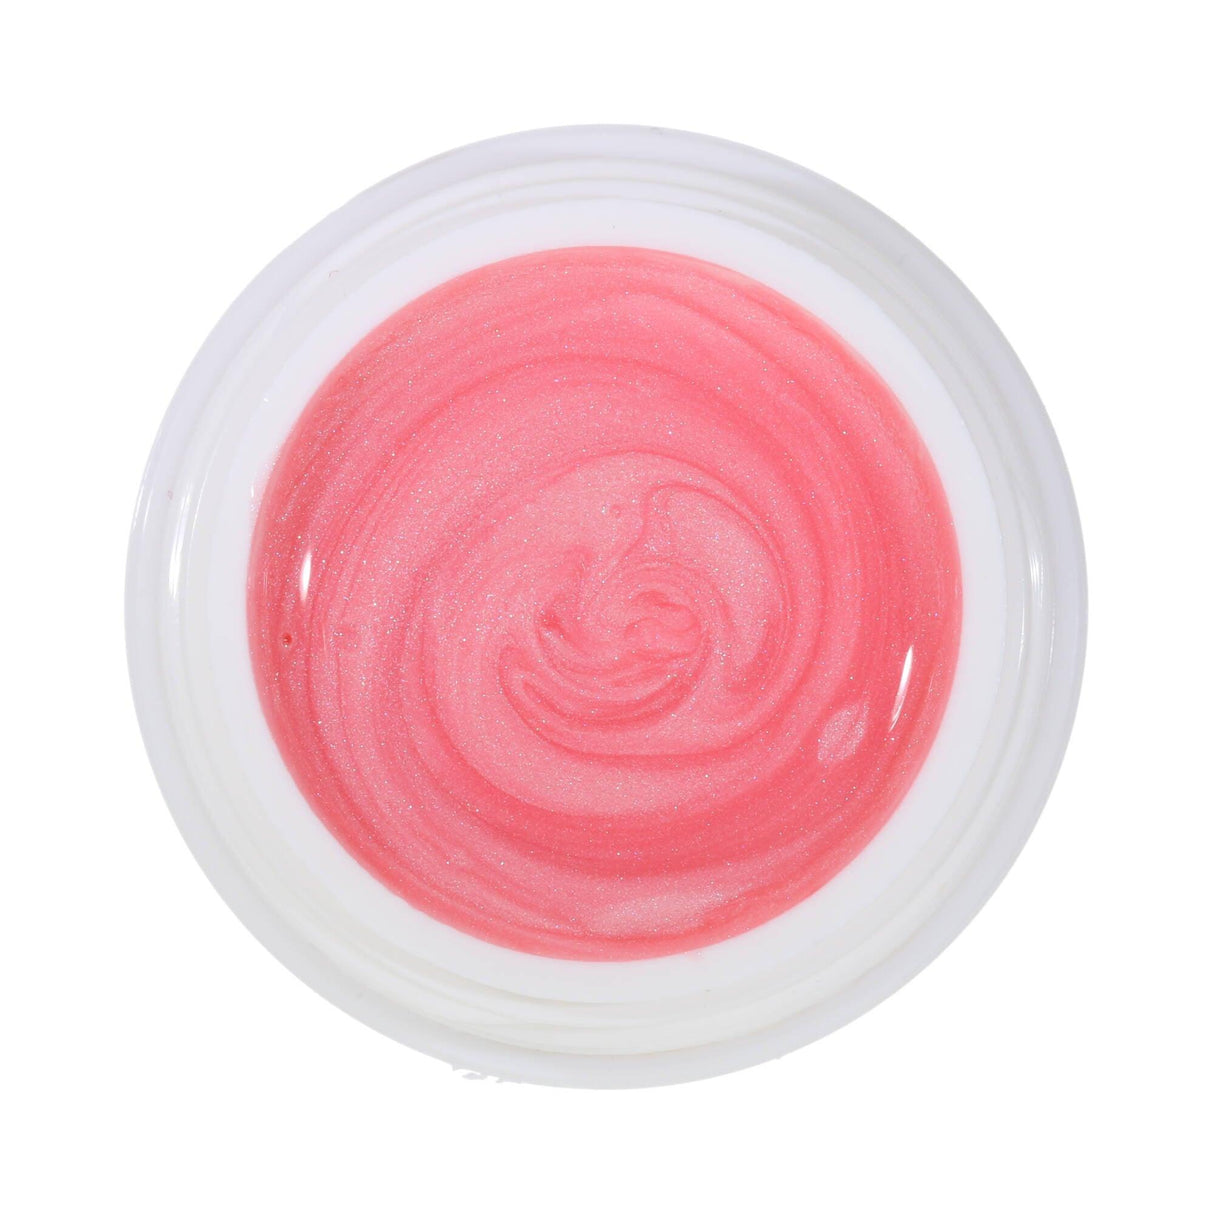 #063 Premium-EFFEKT Color Gel 5ml Kirschblütenrosa mit silberweissem Perlglanz - MSE - The Beauty Company